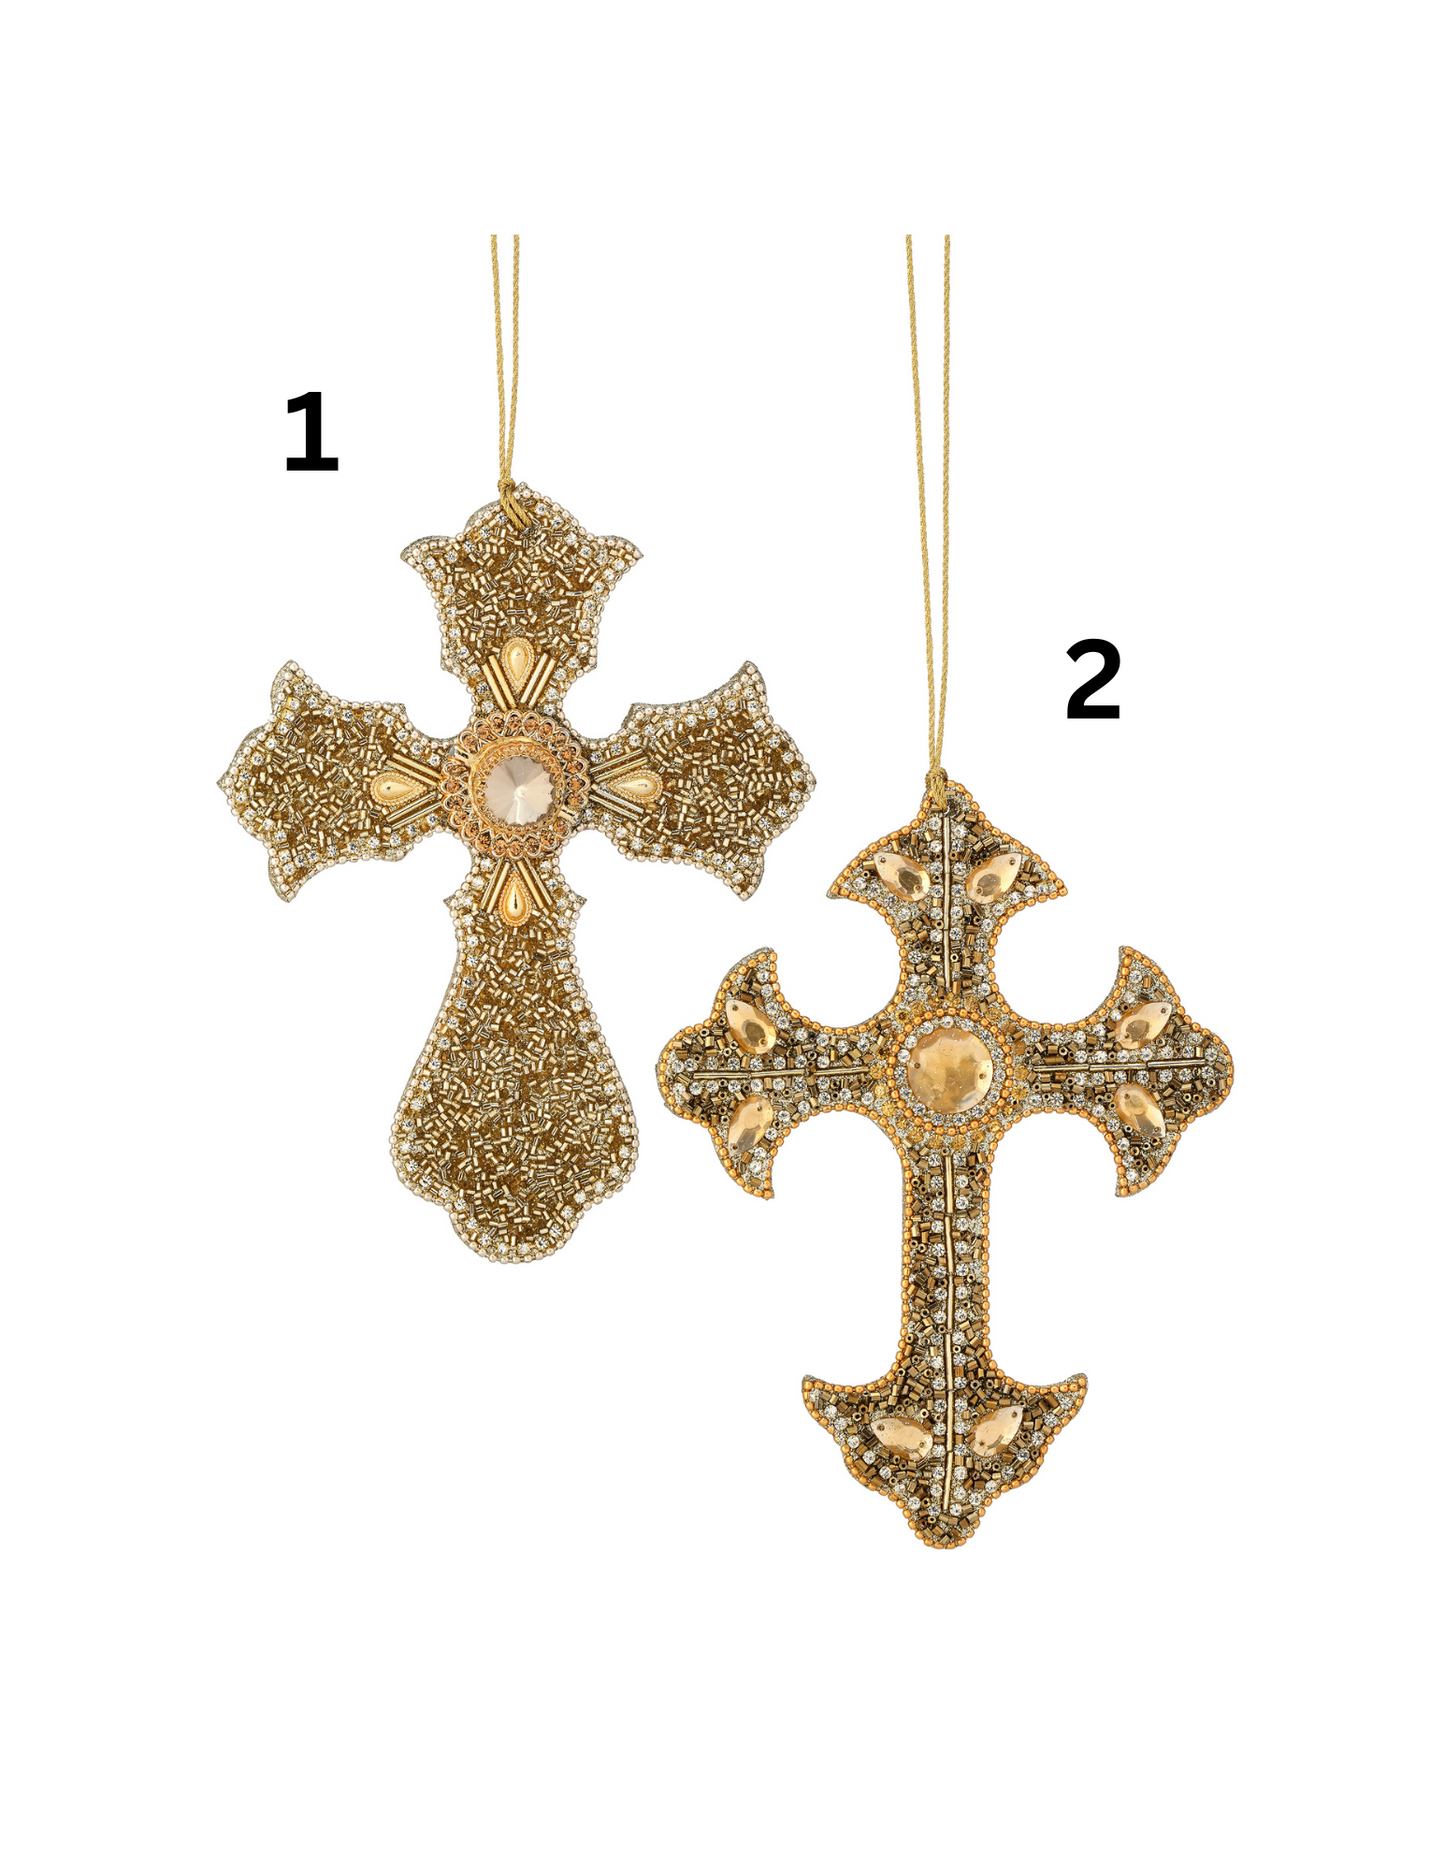 Jeweled Bead Cross Ornament